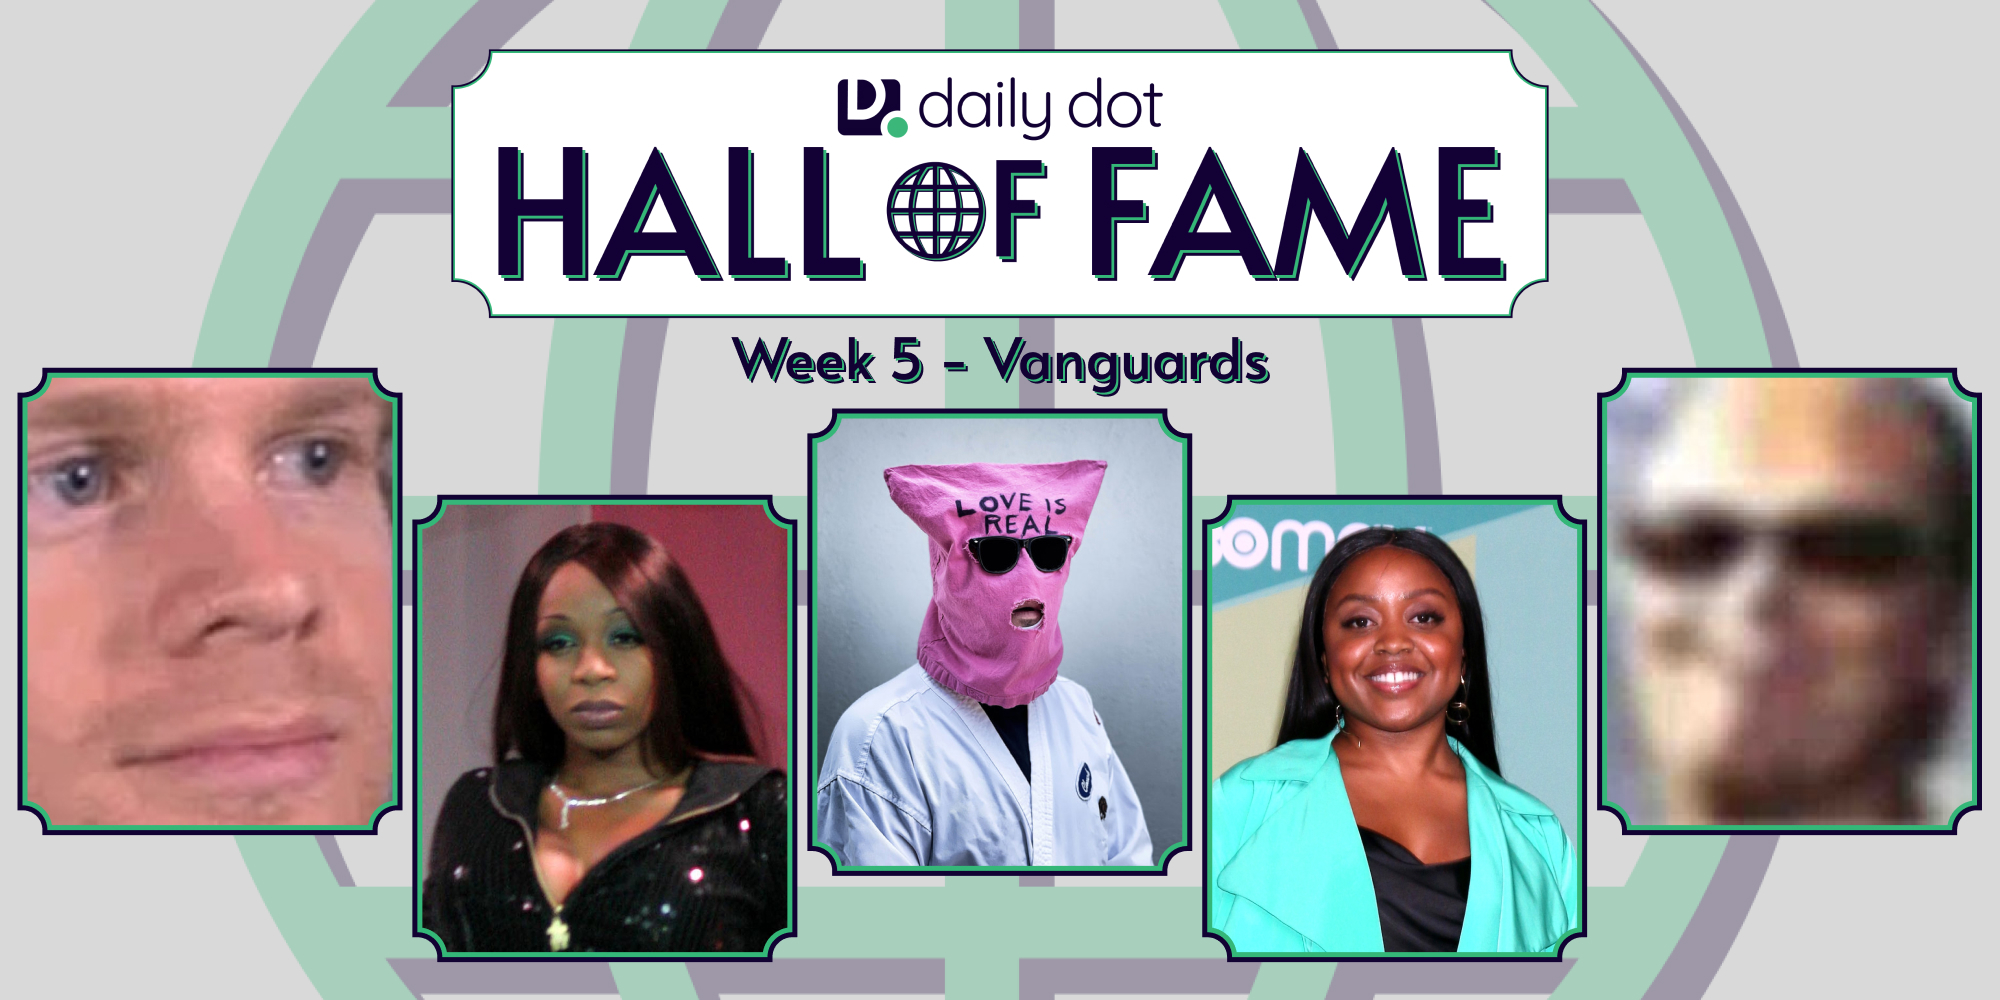 Hall of Fame week 5